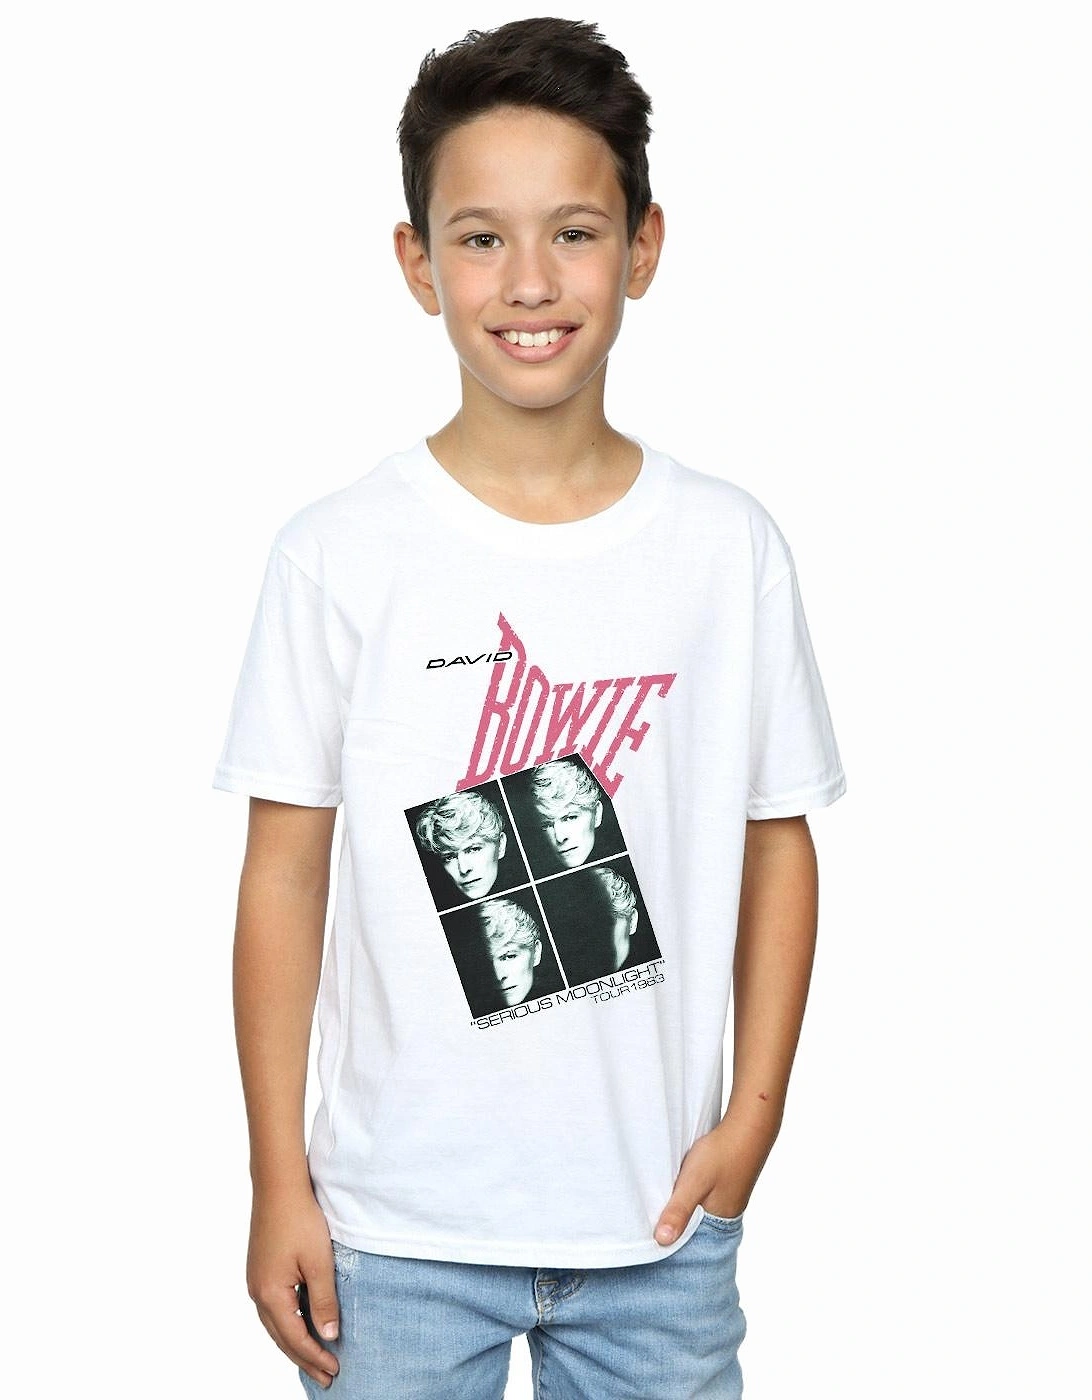 Boys Serious Moonlight Tour 83 T-Shirt